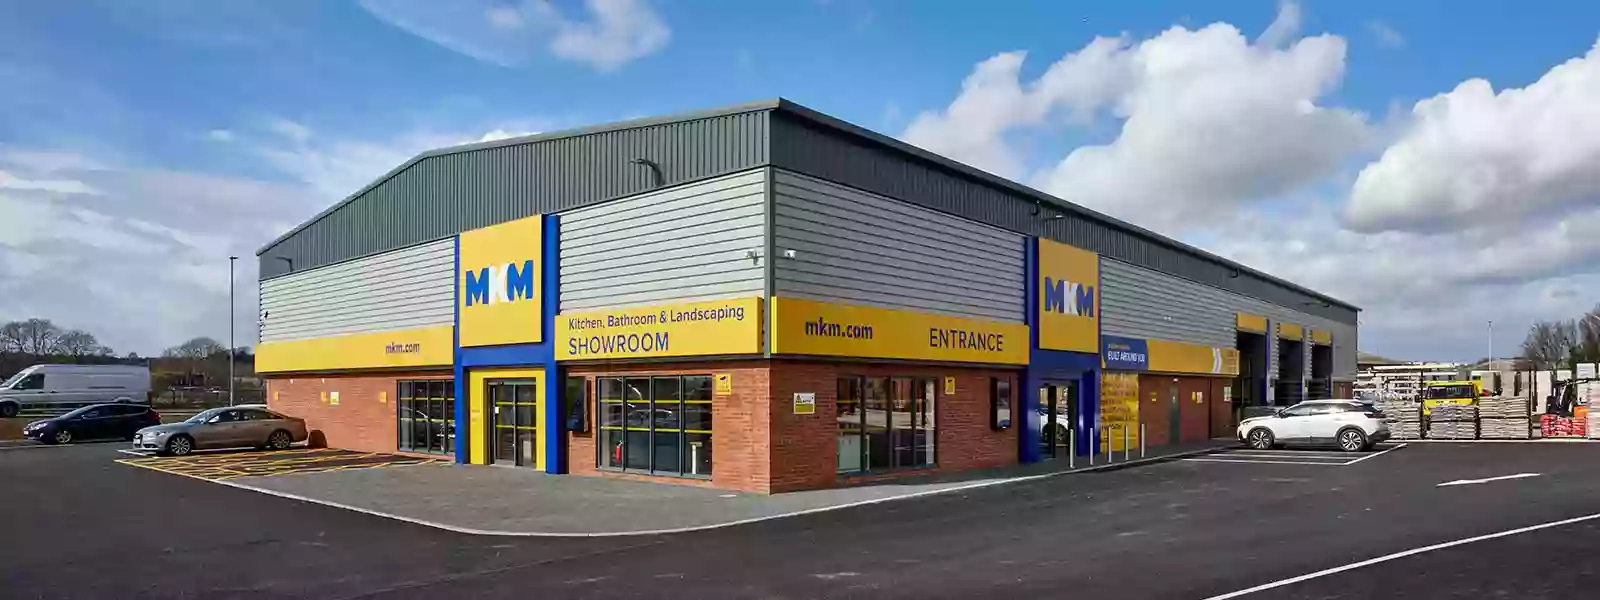 MKM Building Supplies Nottingham